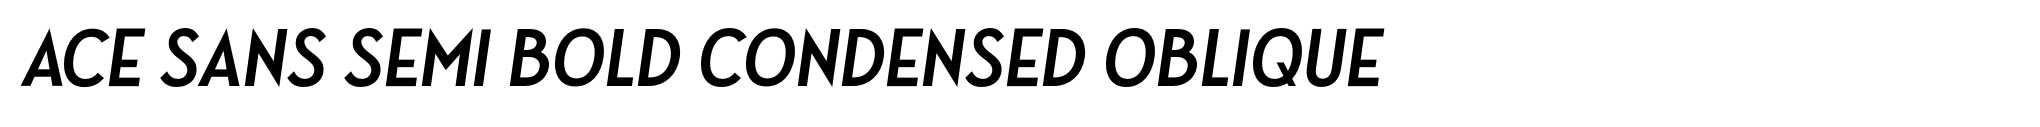 Ace Sans Semi Bold Condensed Oblique image